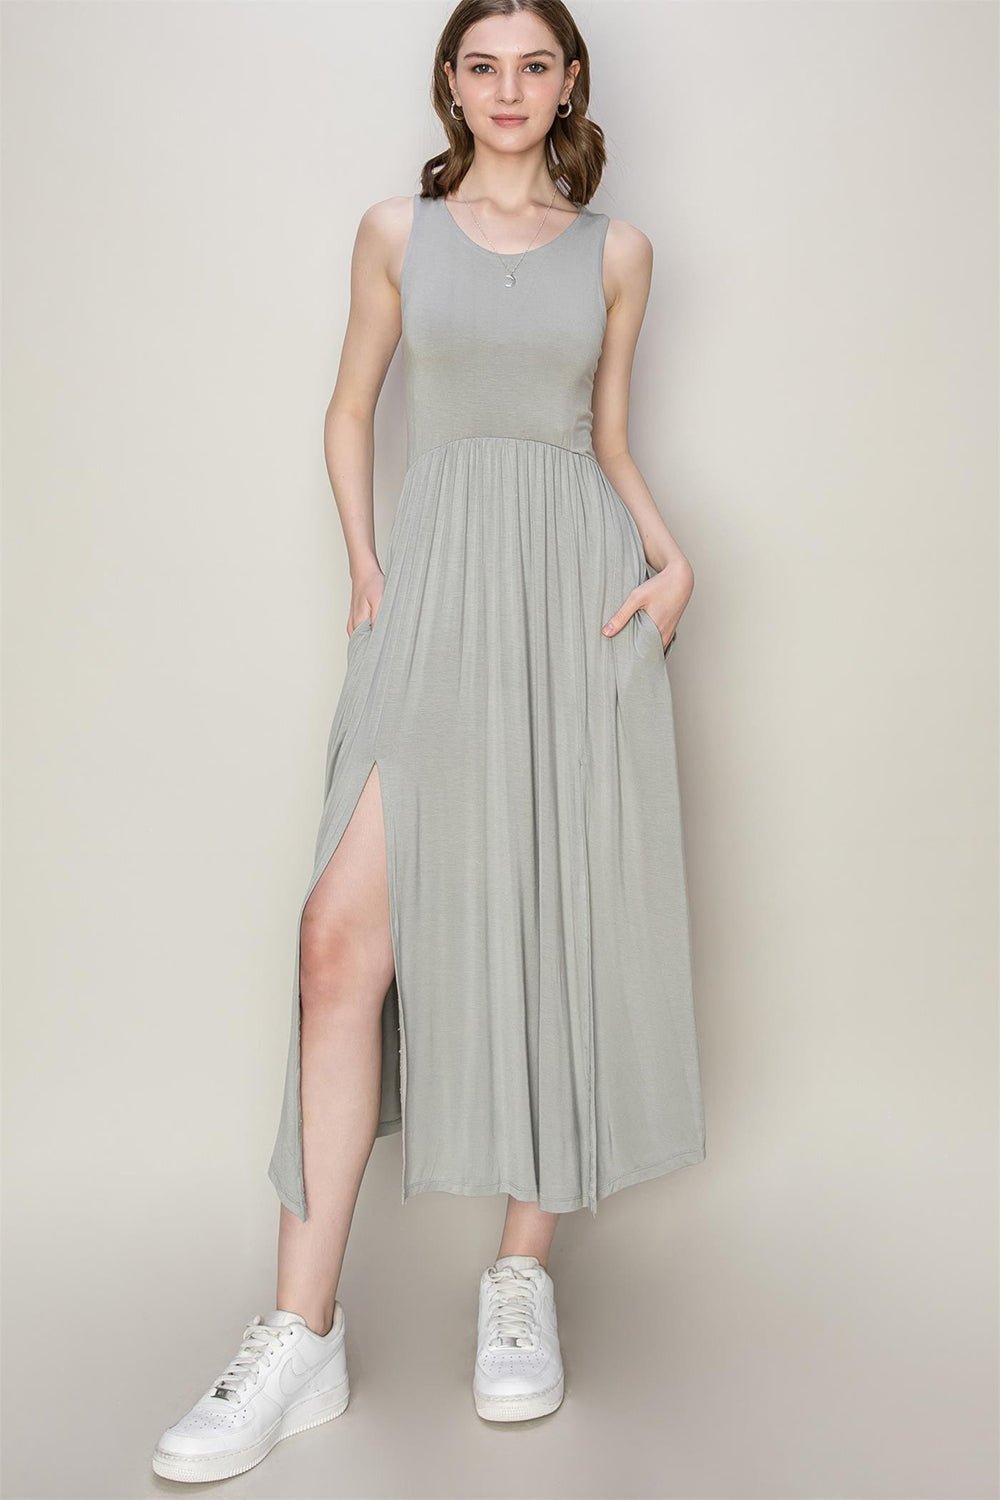 Sleeveless Midi Dress in GrayMidi DressHYFVE